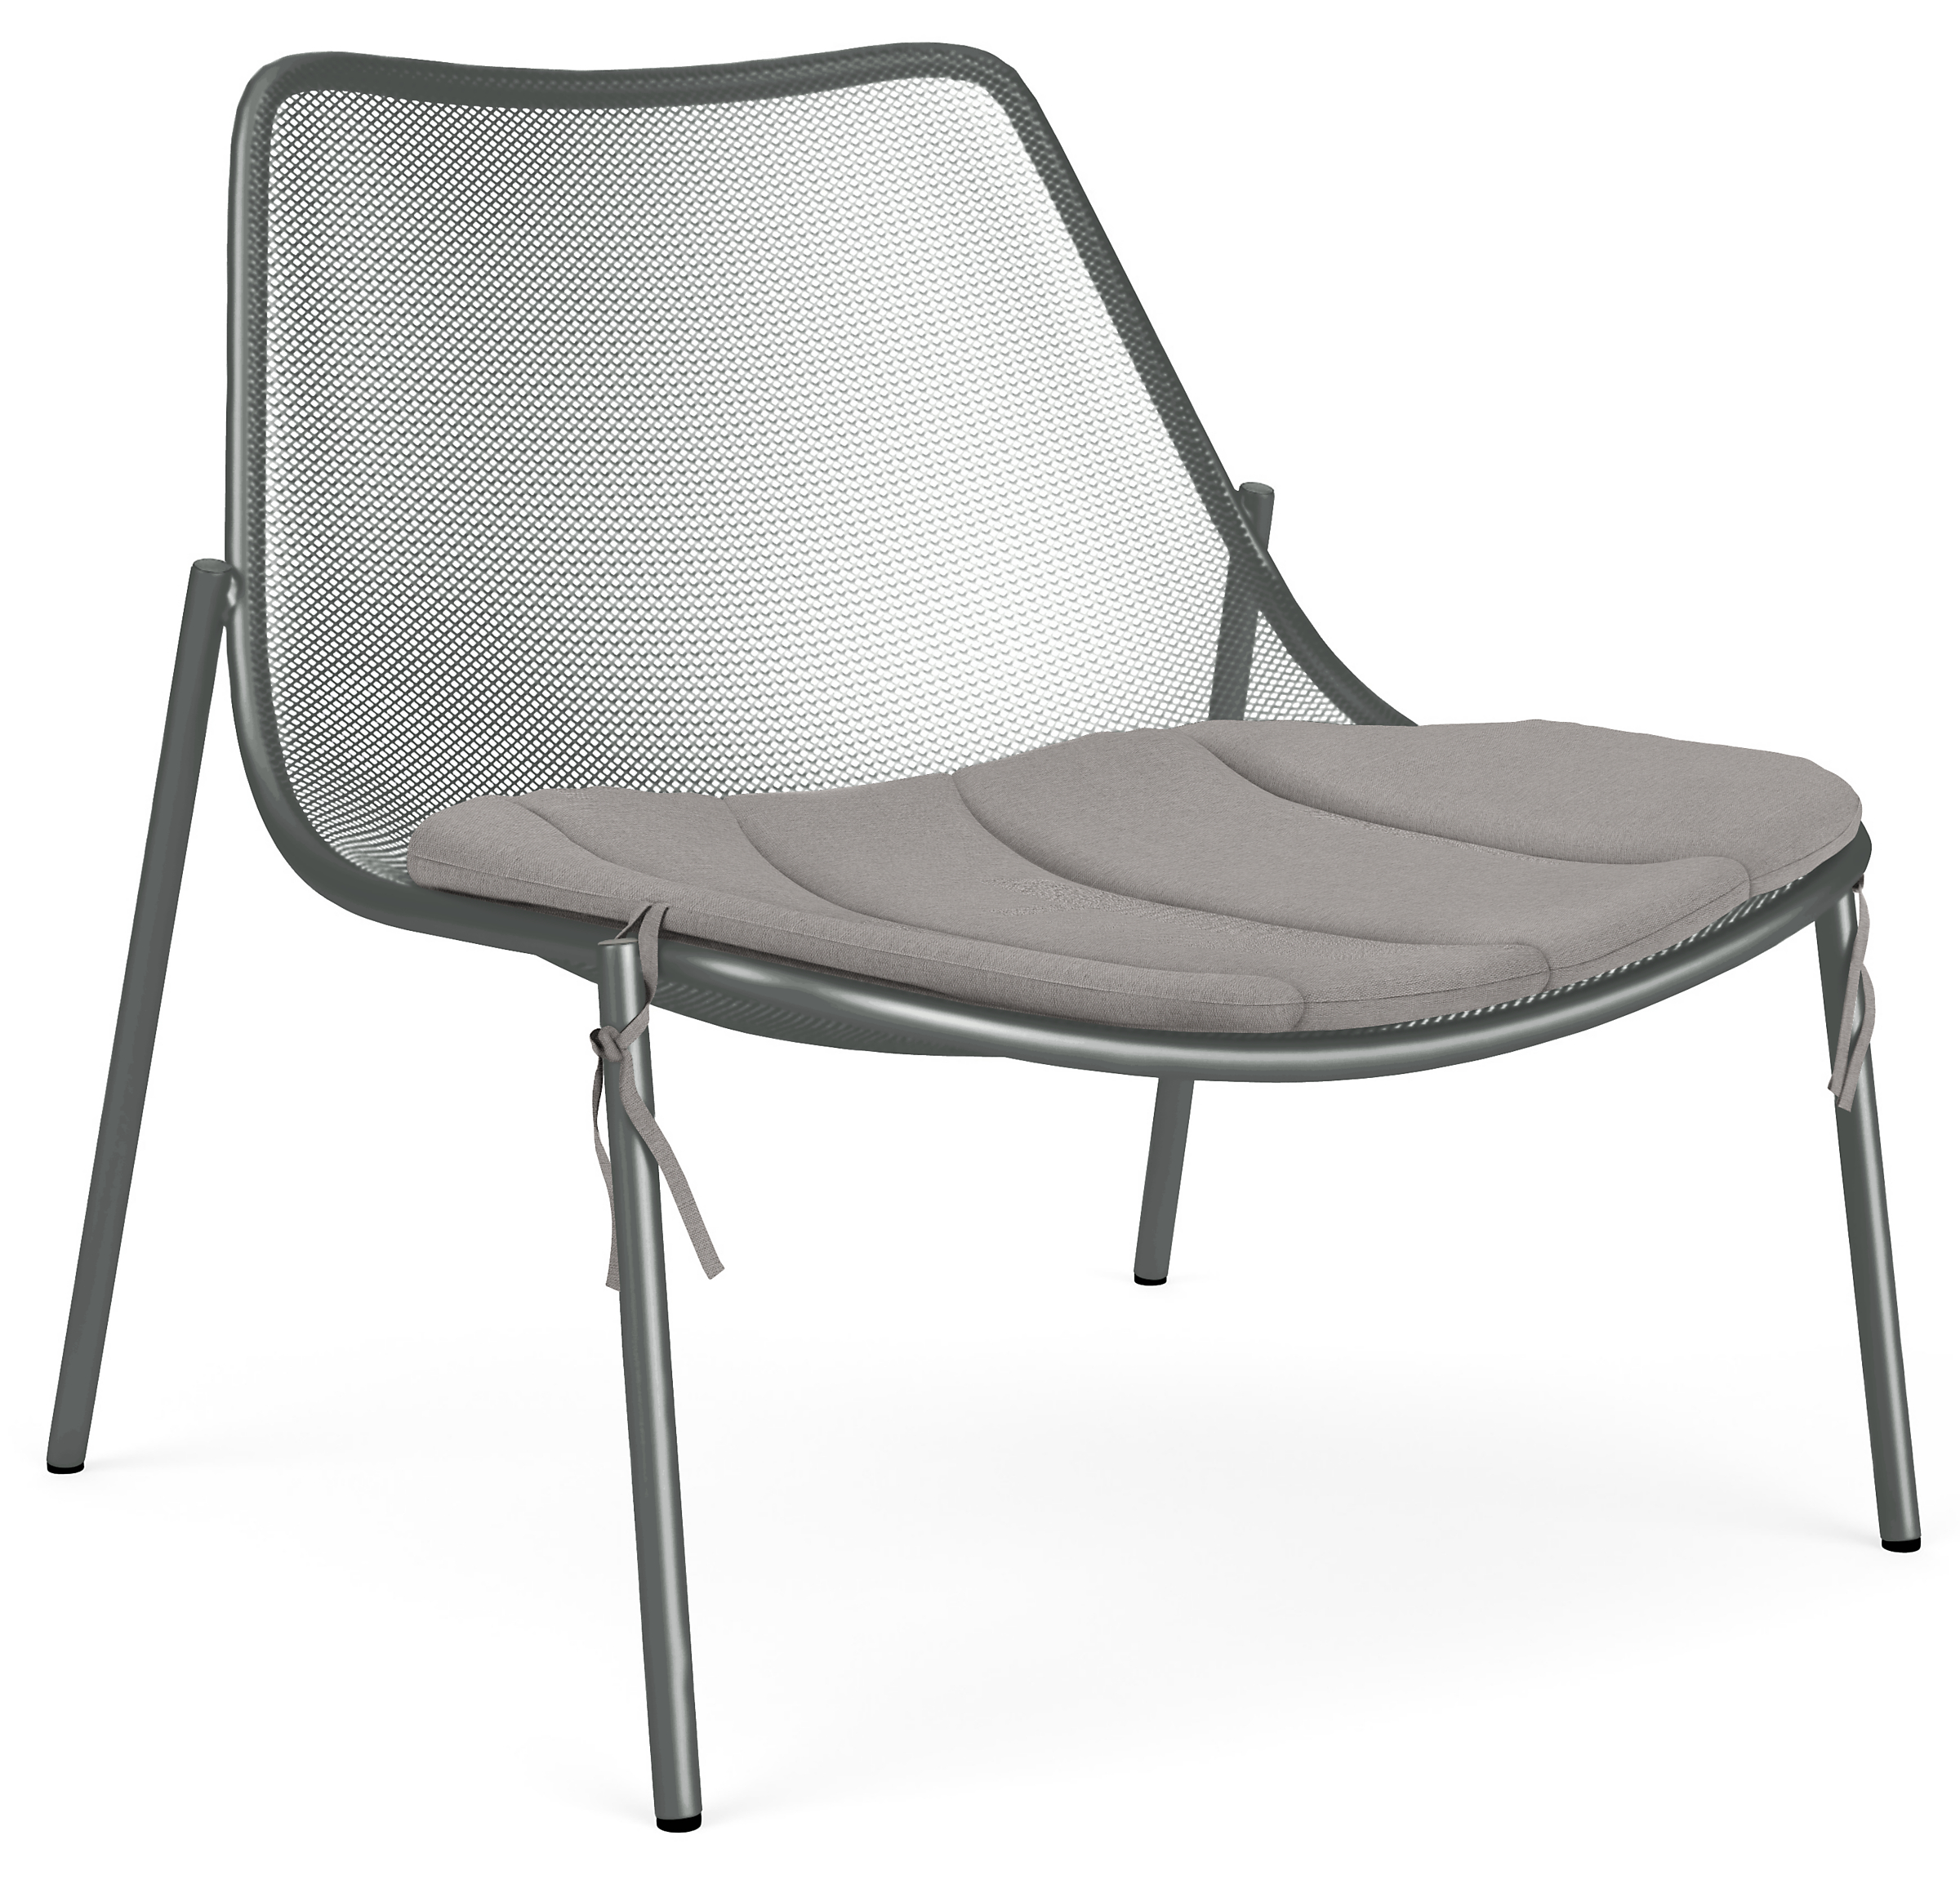 Soleil Lounge Chair with Cushion